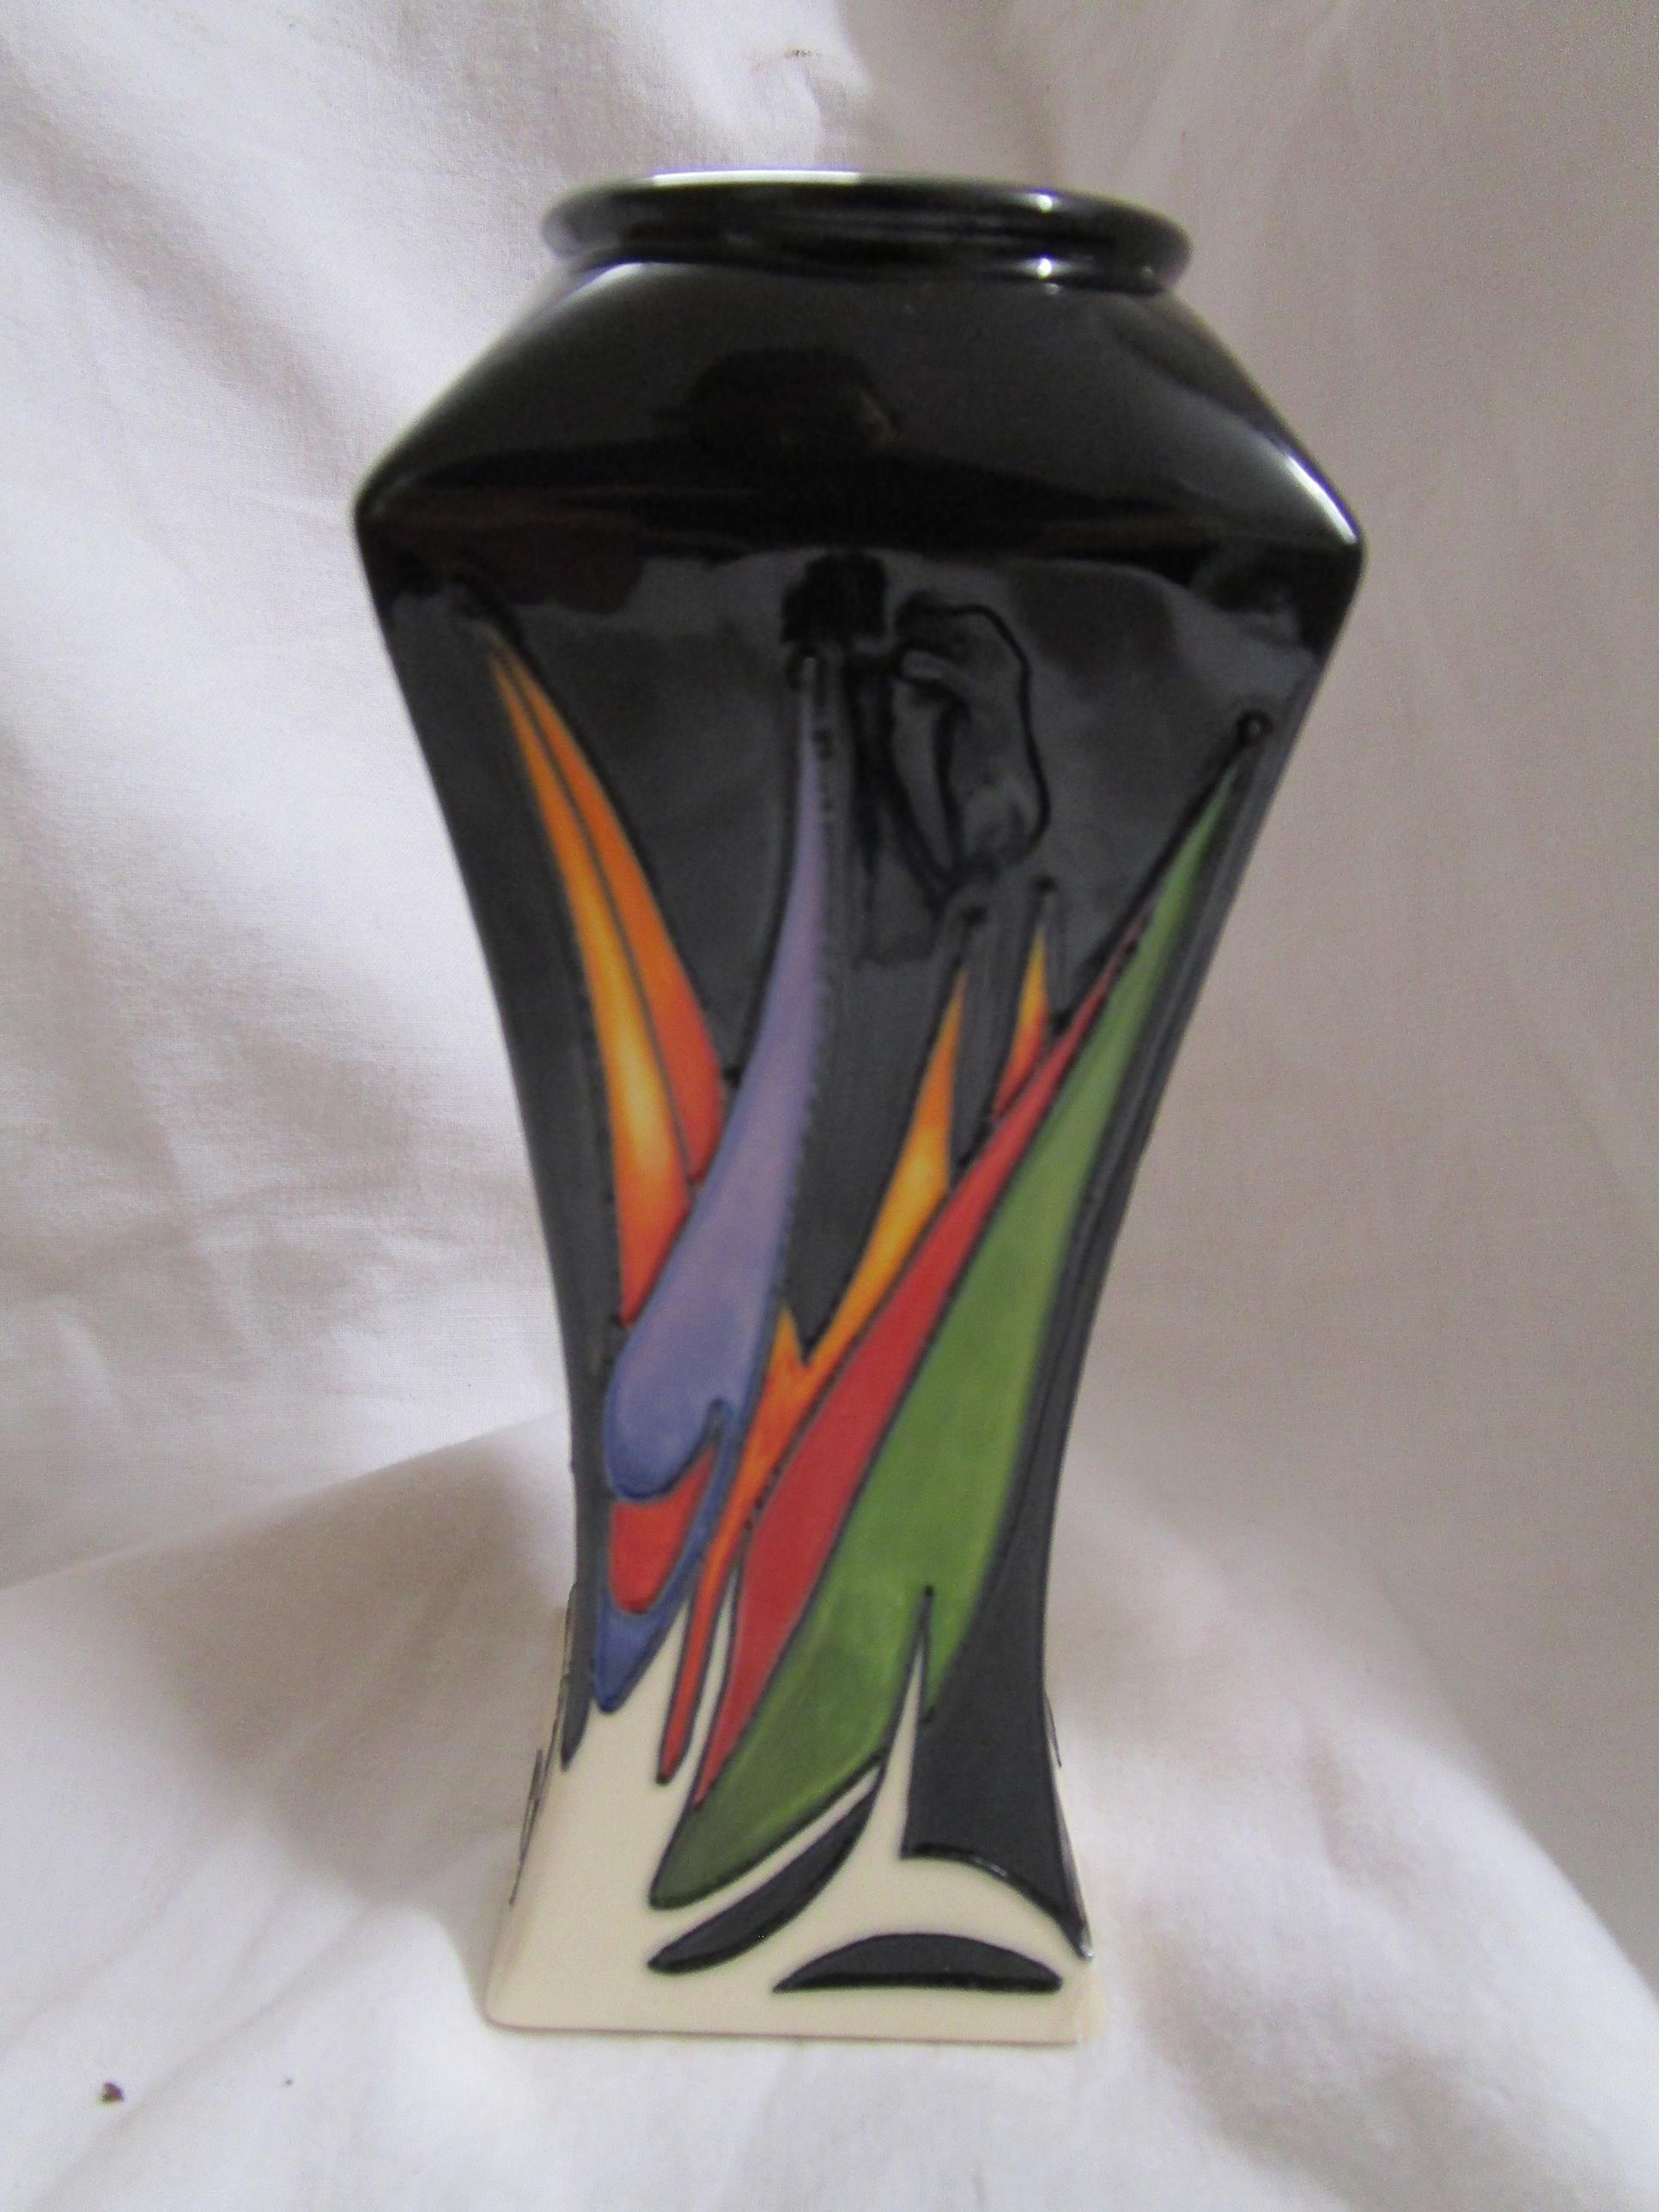 Small Moorcroft vase - Paradise Found by Vicky Lovatt - H: 16cm - Image 6 of 6